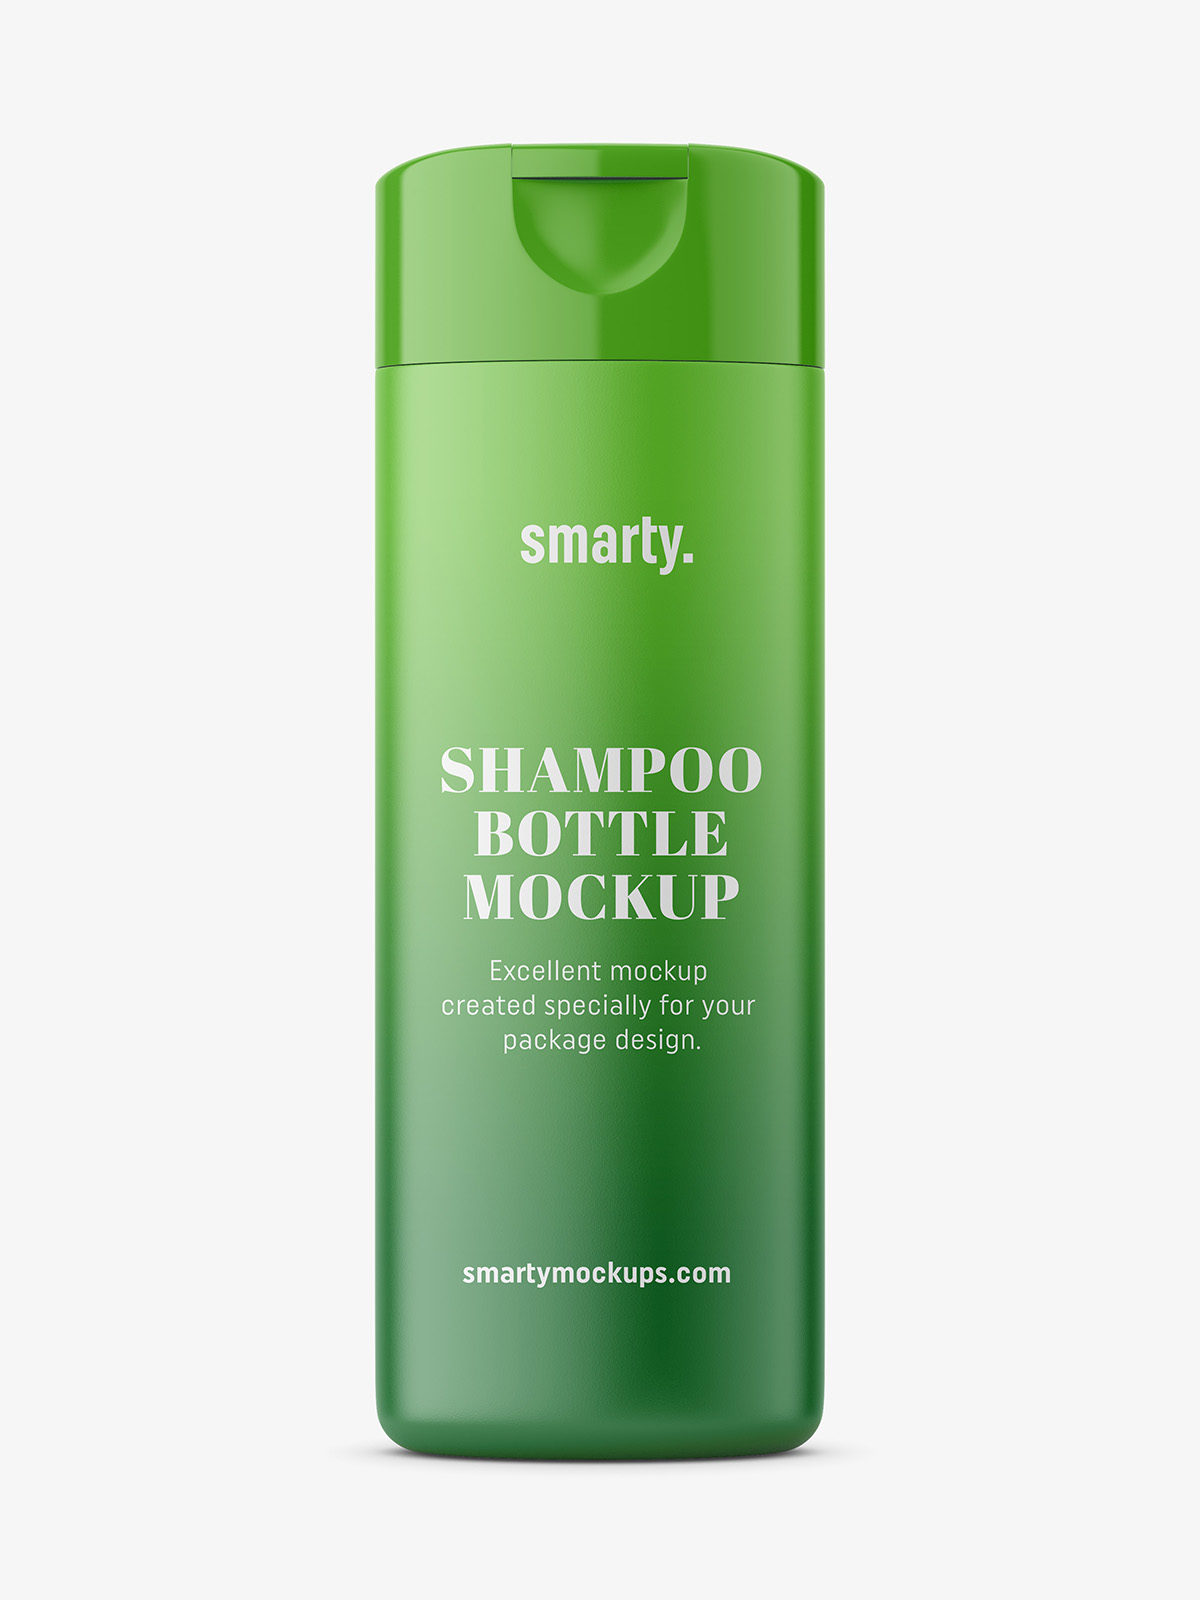 https://smartymockups.com/wp-content/uploads/2016/05/Shampoo_Bottle_Mockup_2ok.jpg